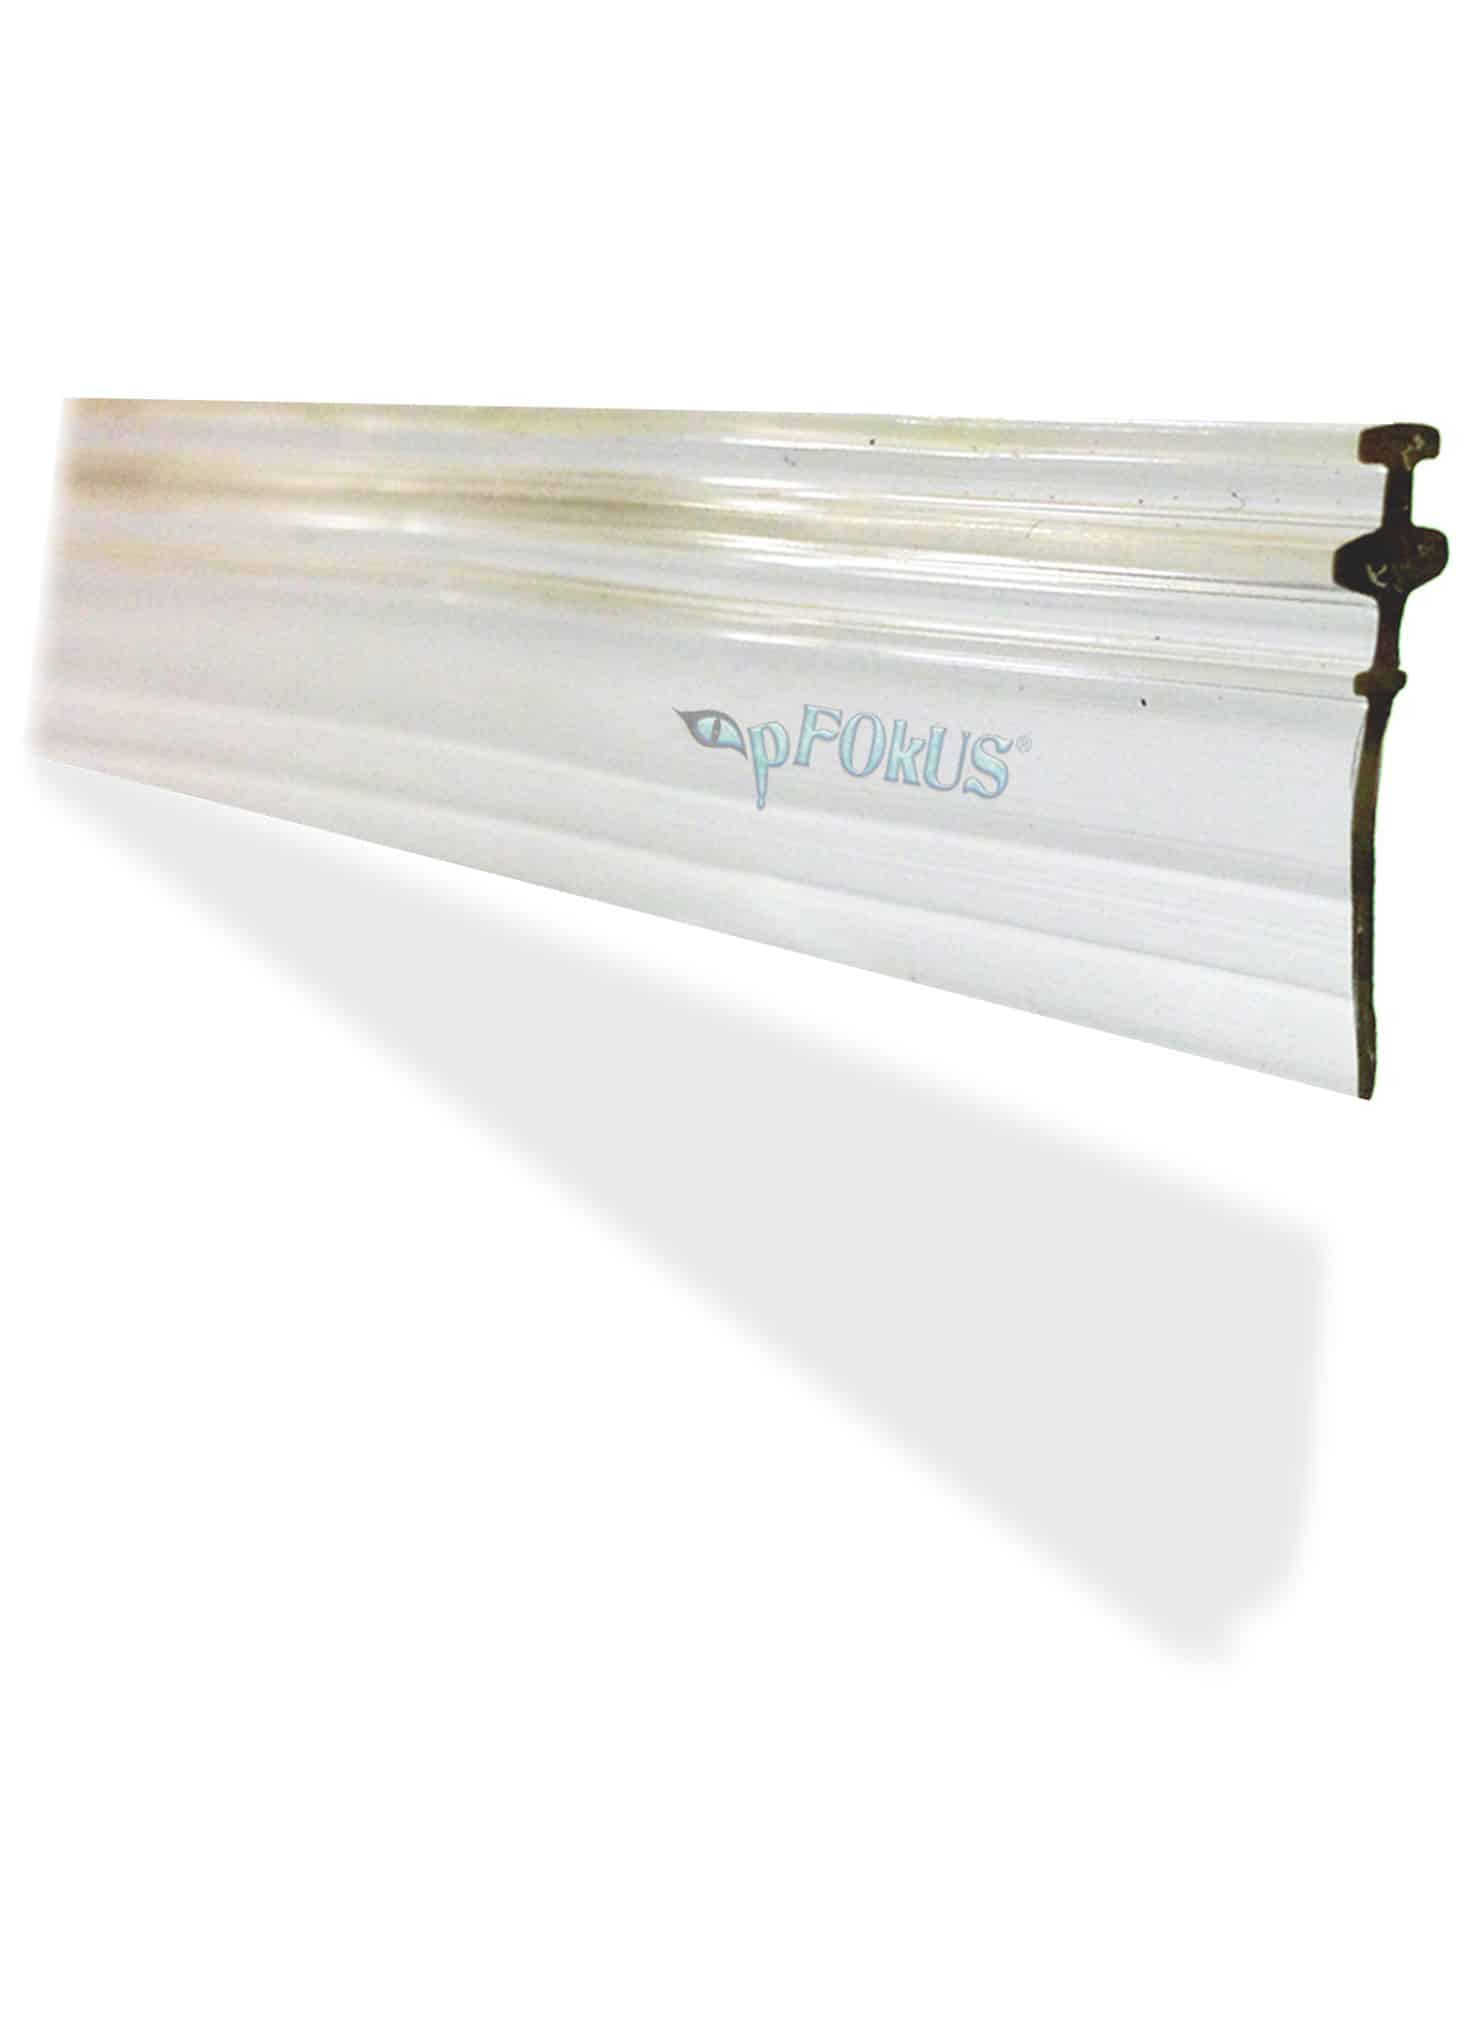 DS8228 Shower Glass Door Metal Drip Rail Seal Wipe Replacement Quality pFOkUS